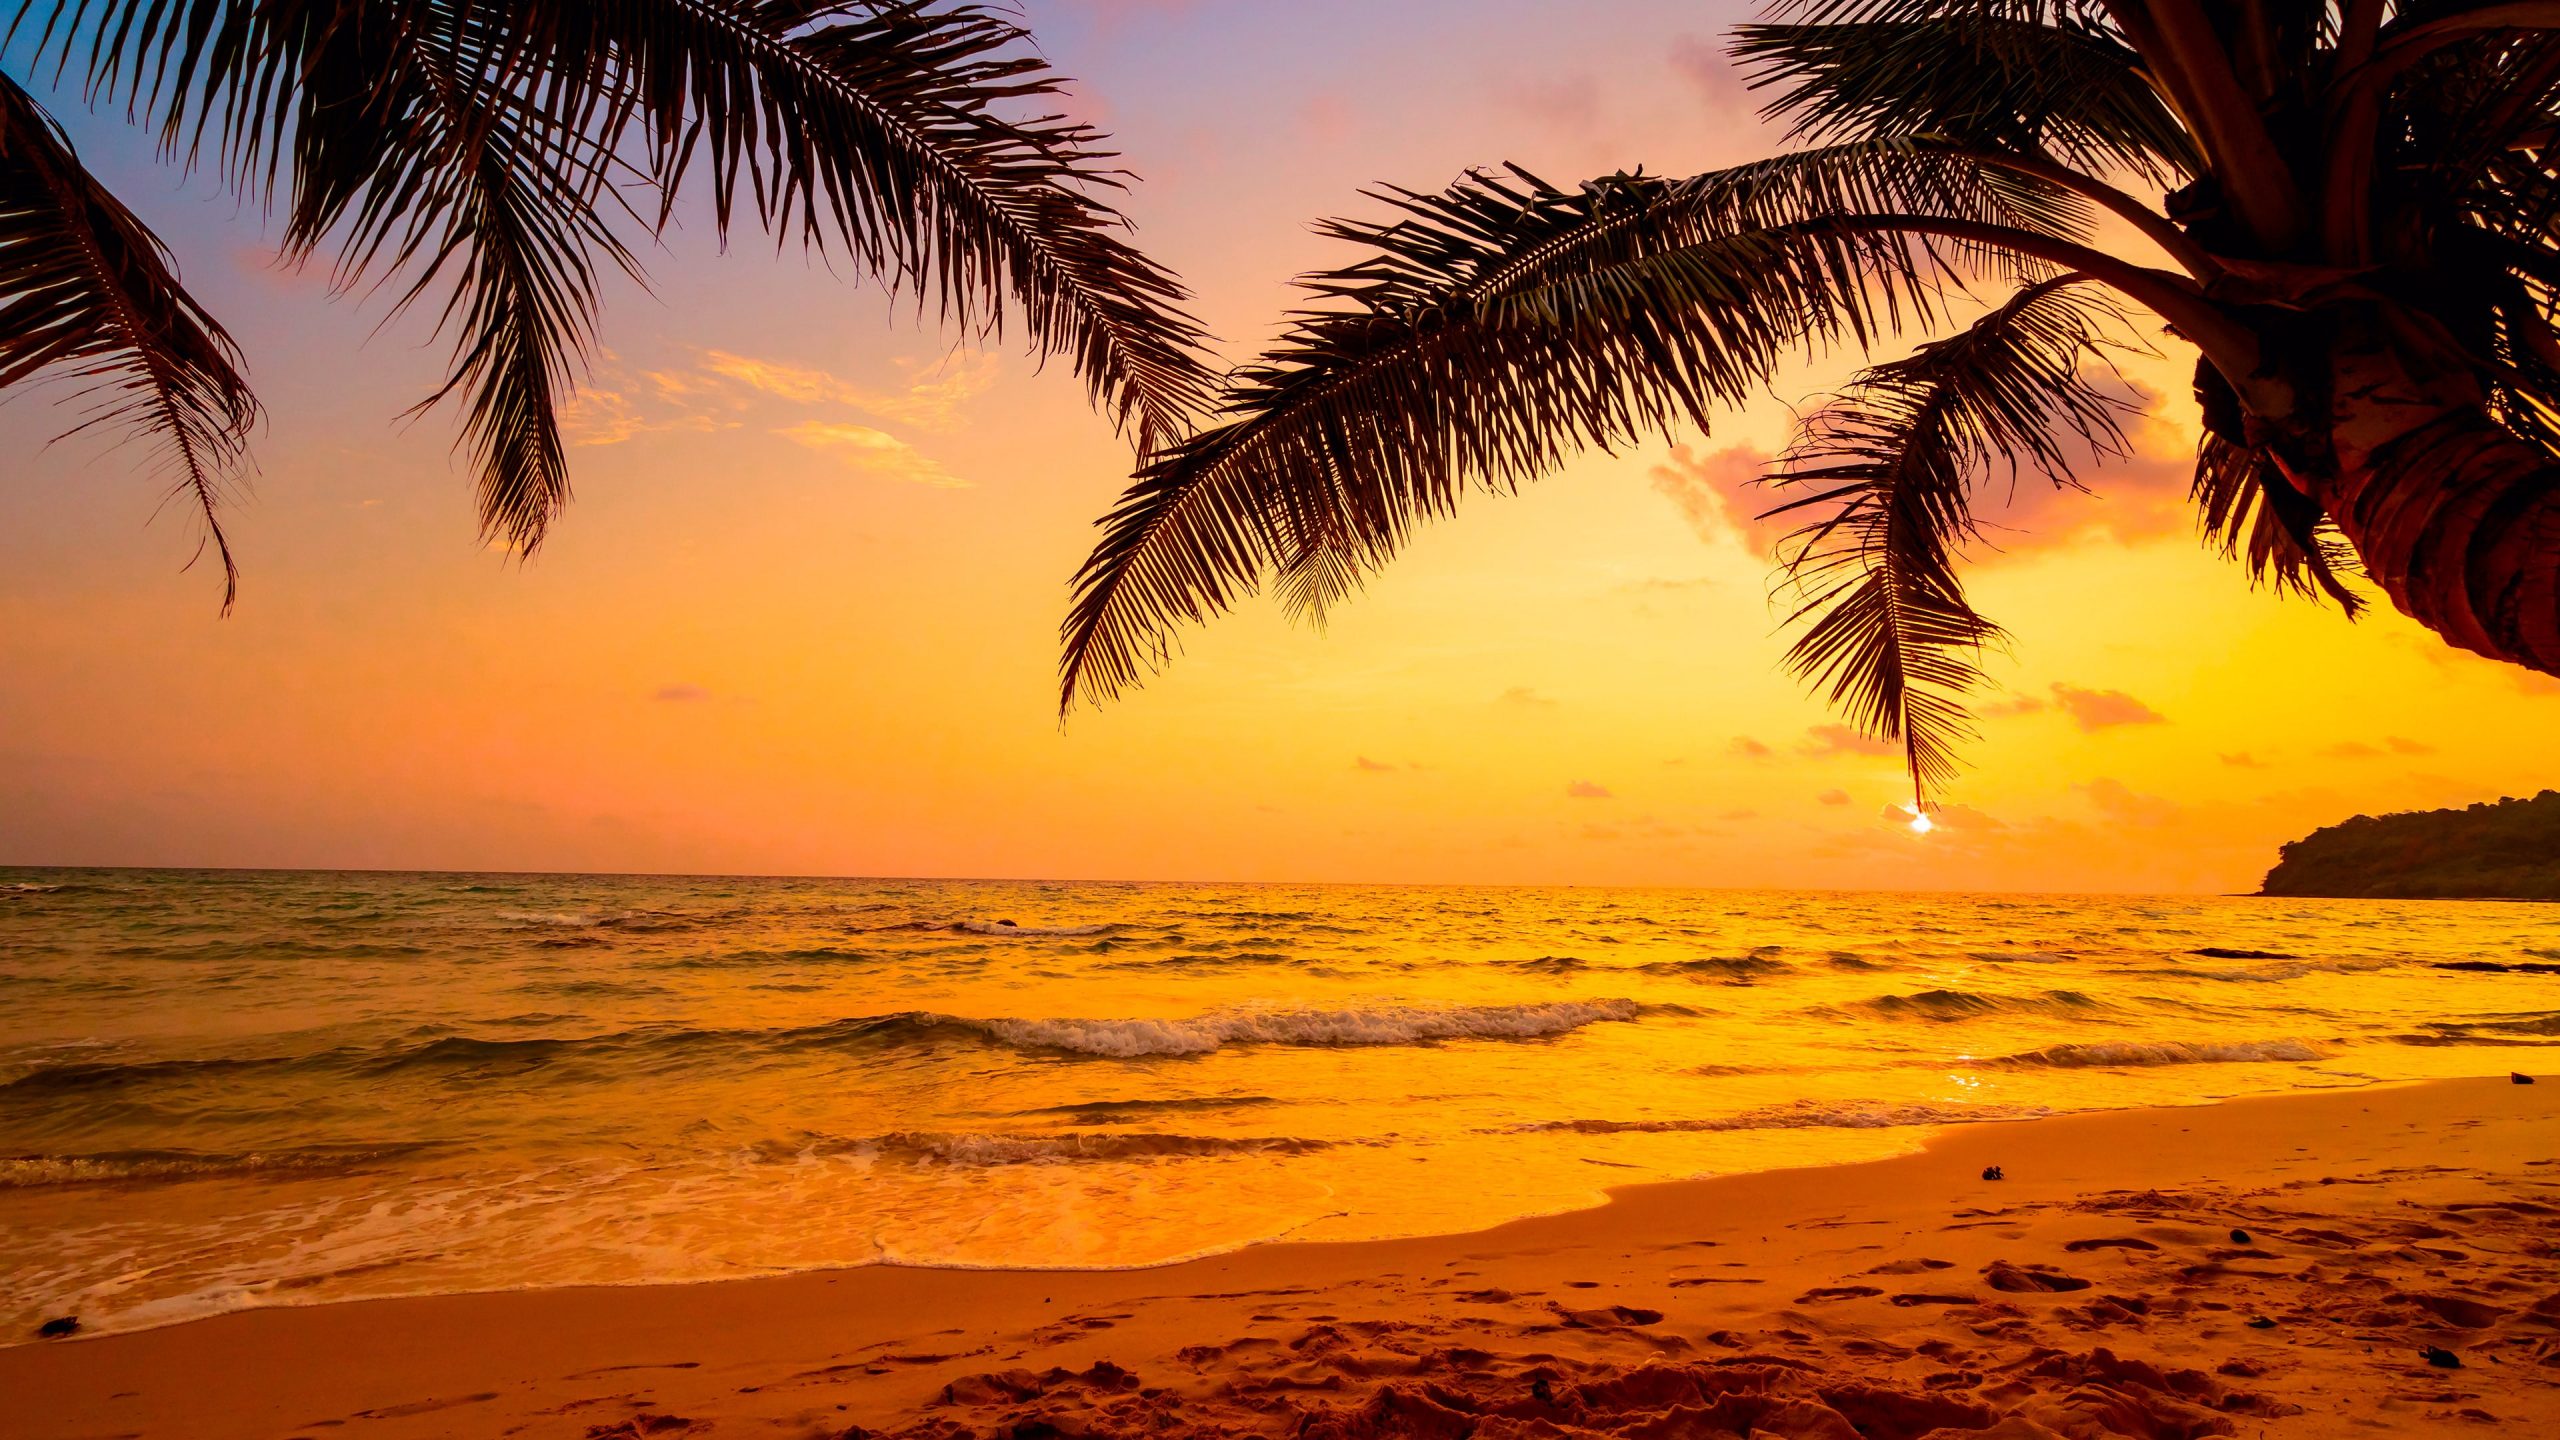 Sky, sea, tropics, sunset, palm tree, arecales, tropical landscape wallpaper